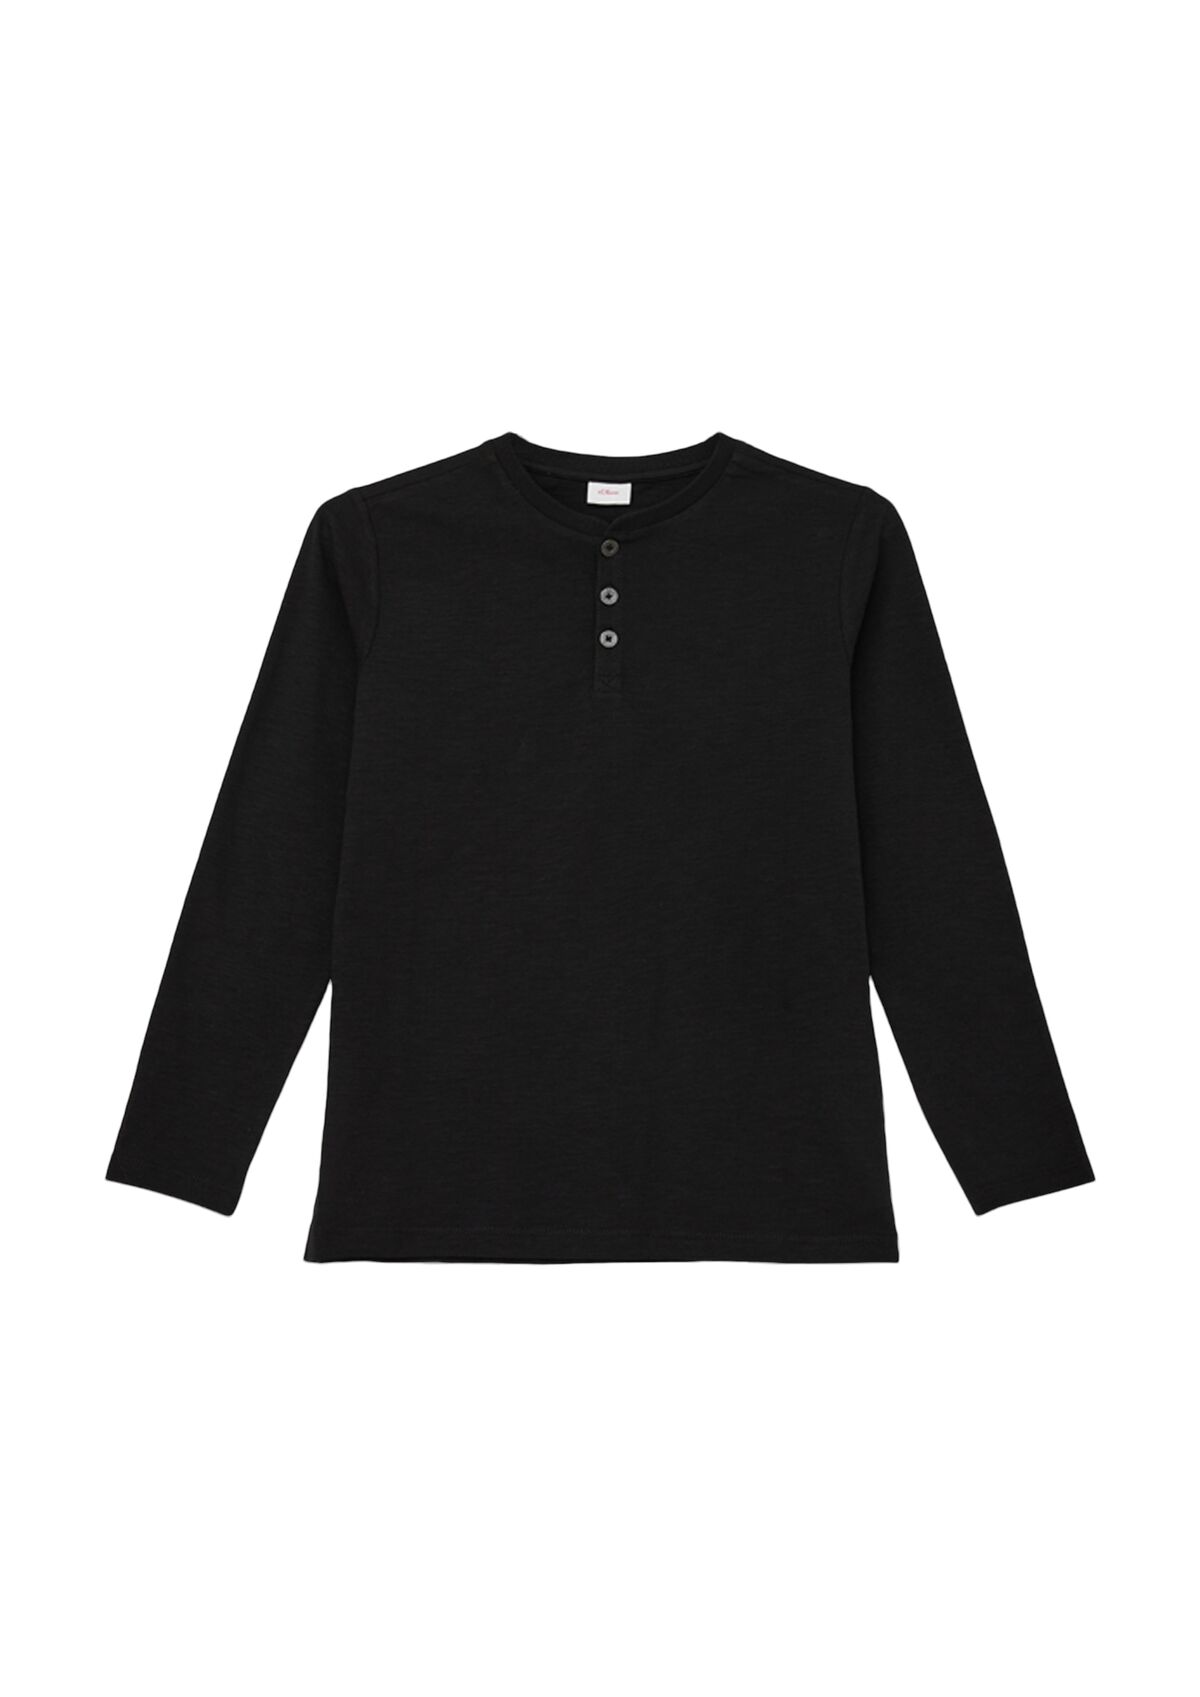 s.Oliver long-sleeved shirt, Black - Jesper Junior | FAOR Oy